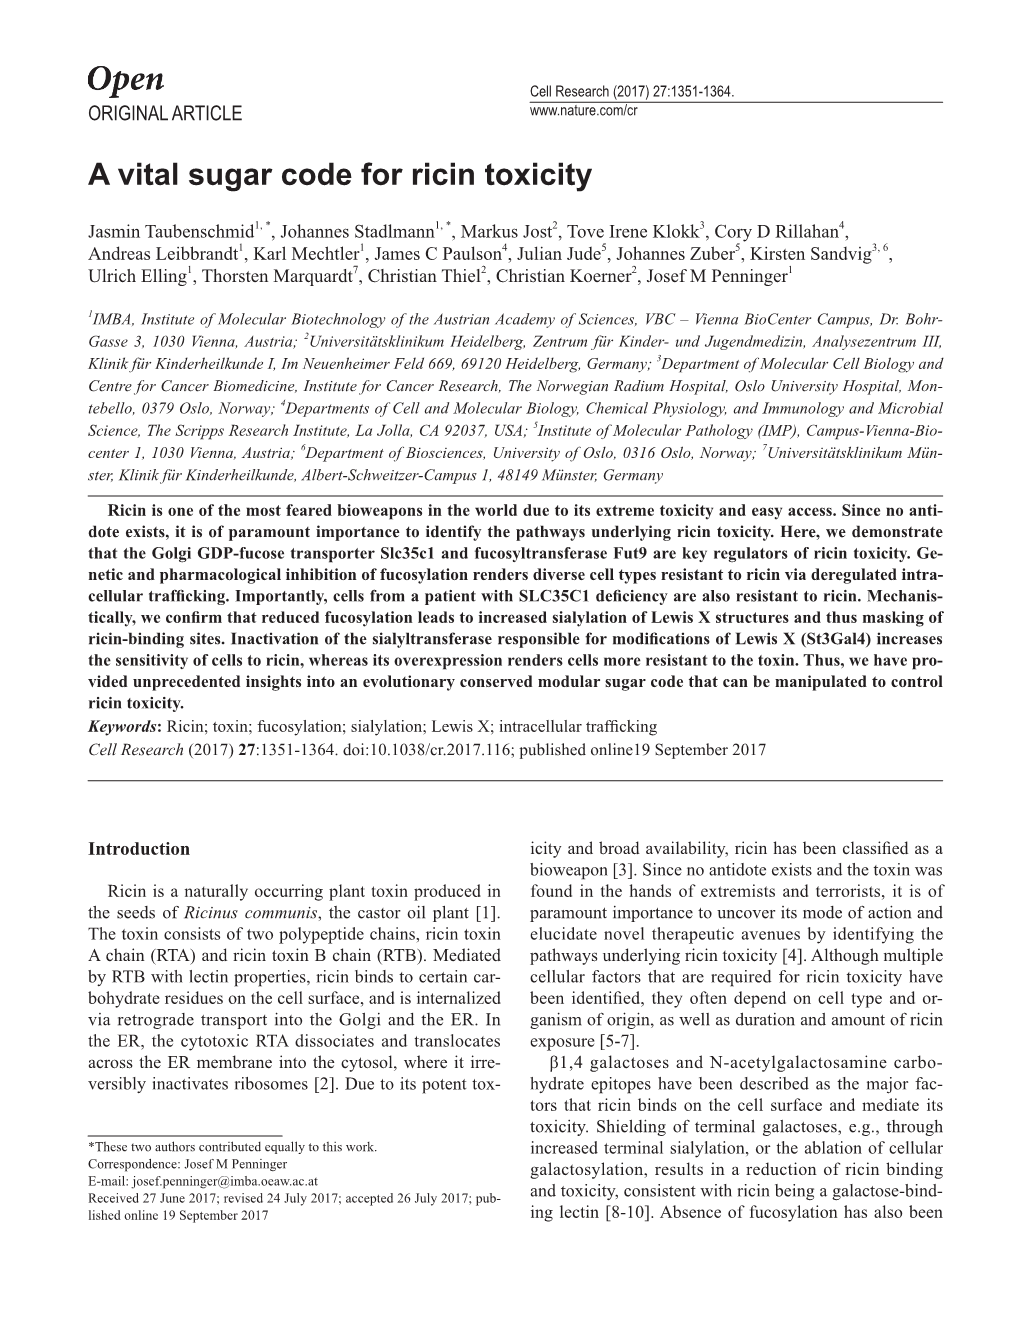 A Vital Sugar Code for Ricin Toxicity